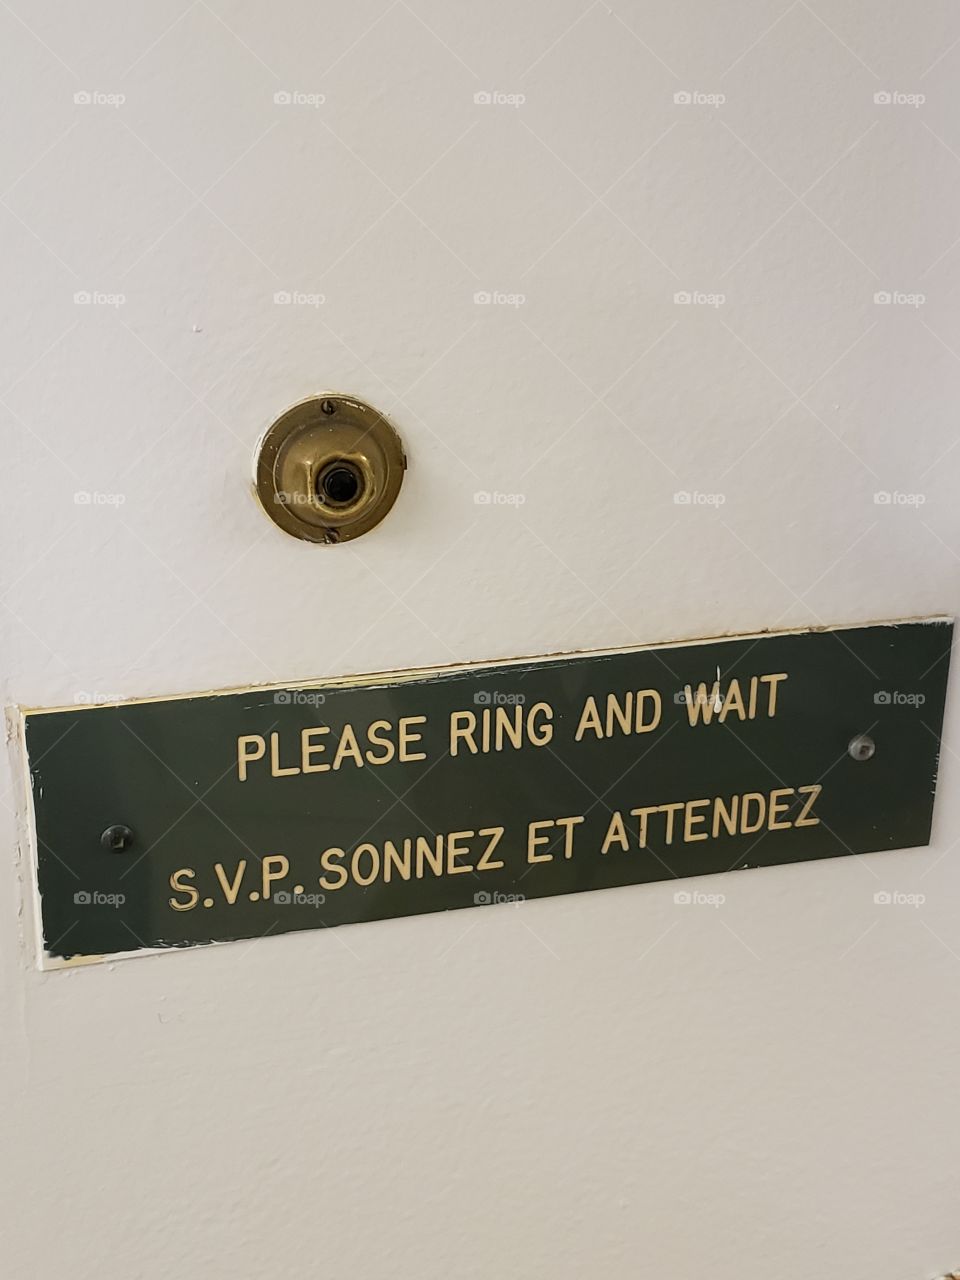 Vintage doorbell and sign